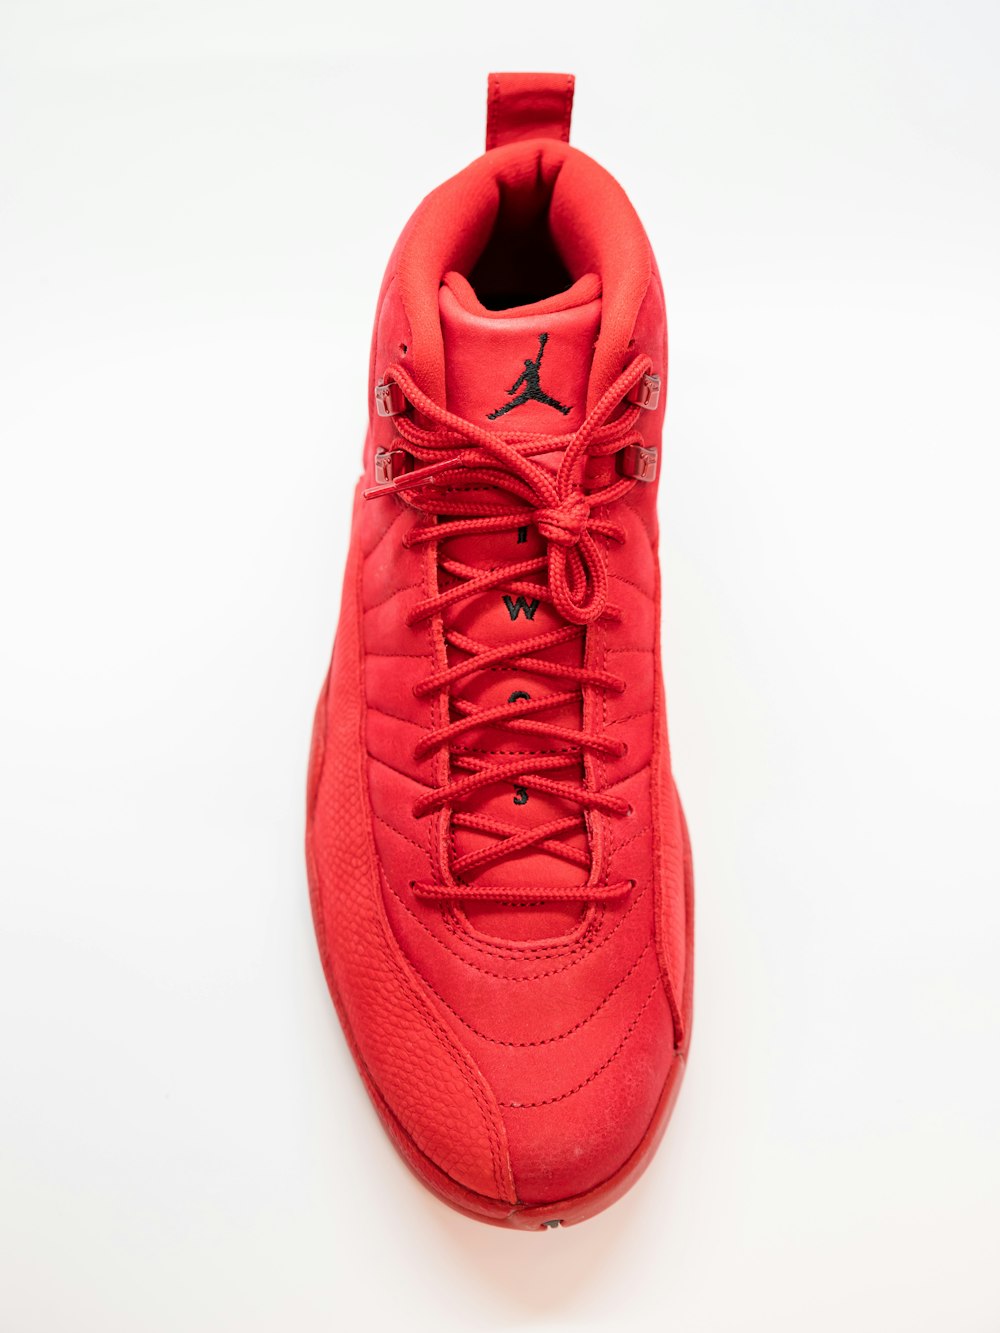 Foto Zapato Air Jordan 12 rojo sin emparejar – Imagen Rojo gratis en  Unsplash